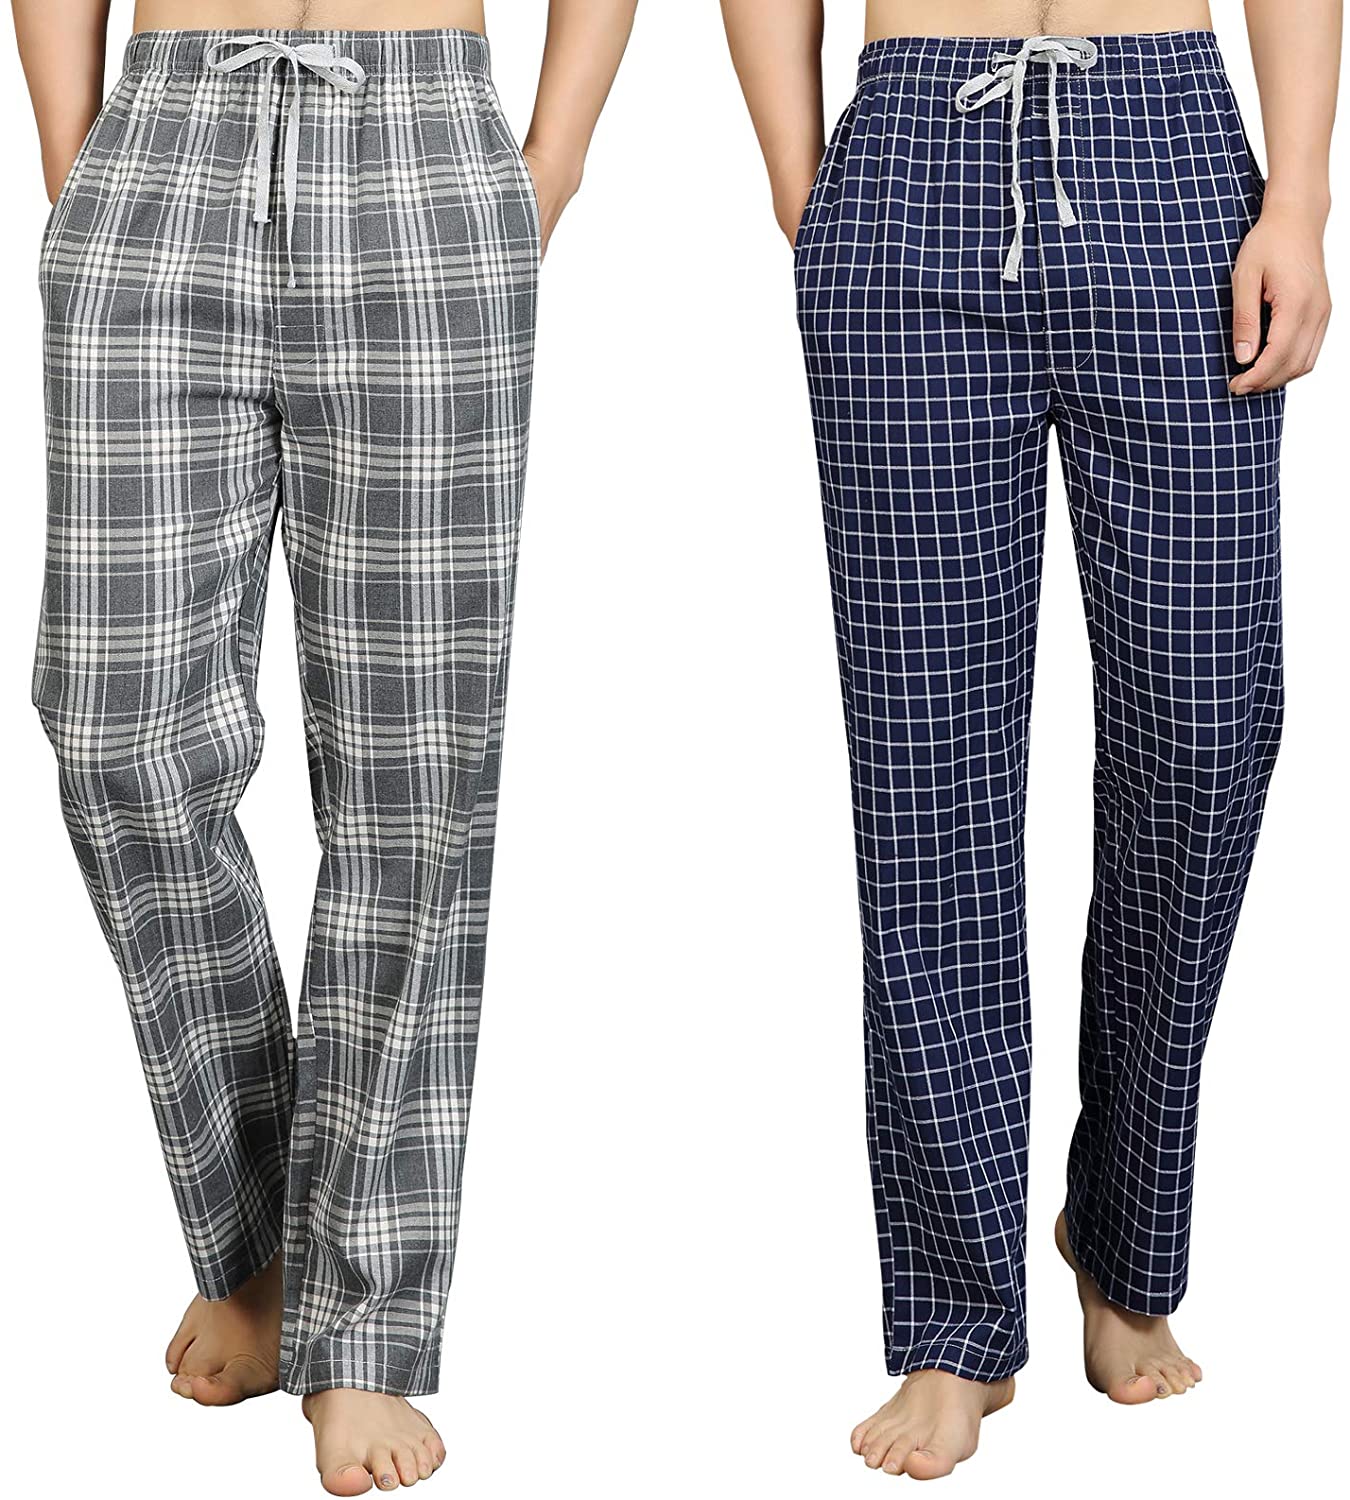 RENZER Men's Pajamas Pants 100% Knit Cotton Long Lounge Pants